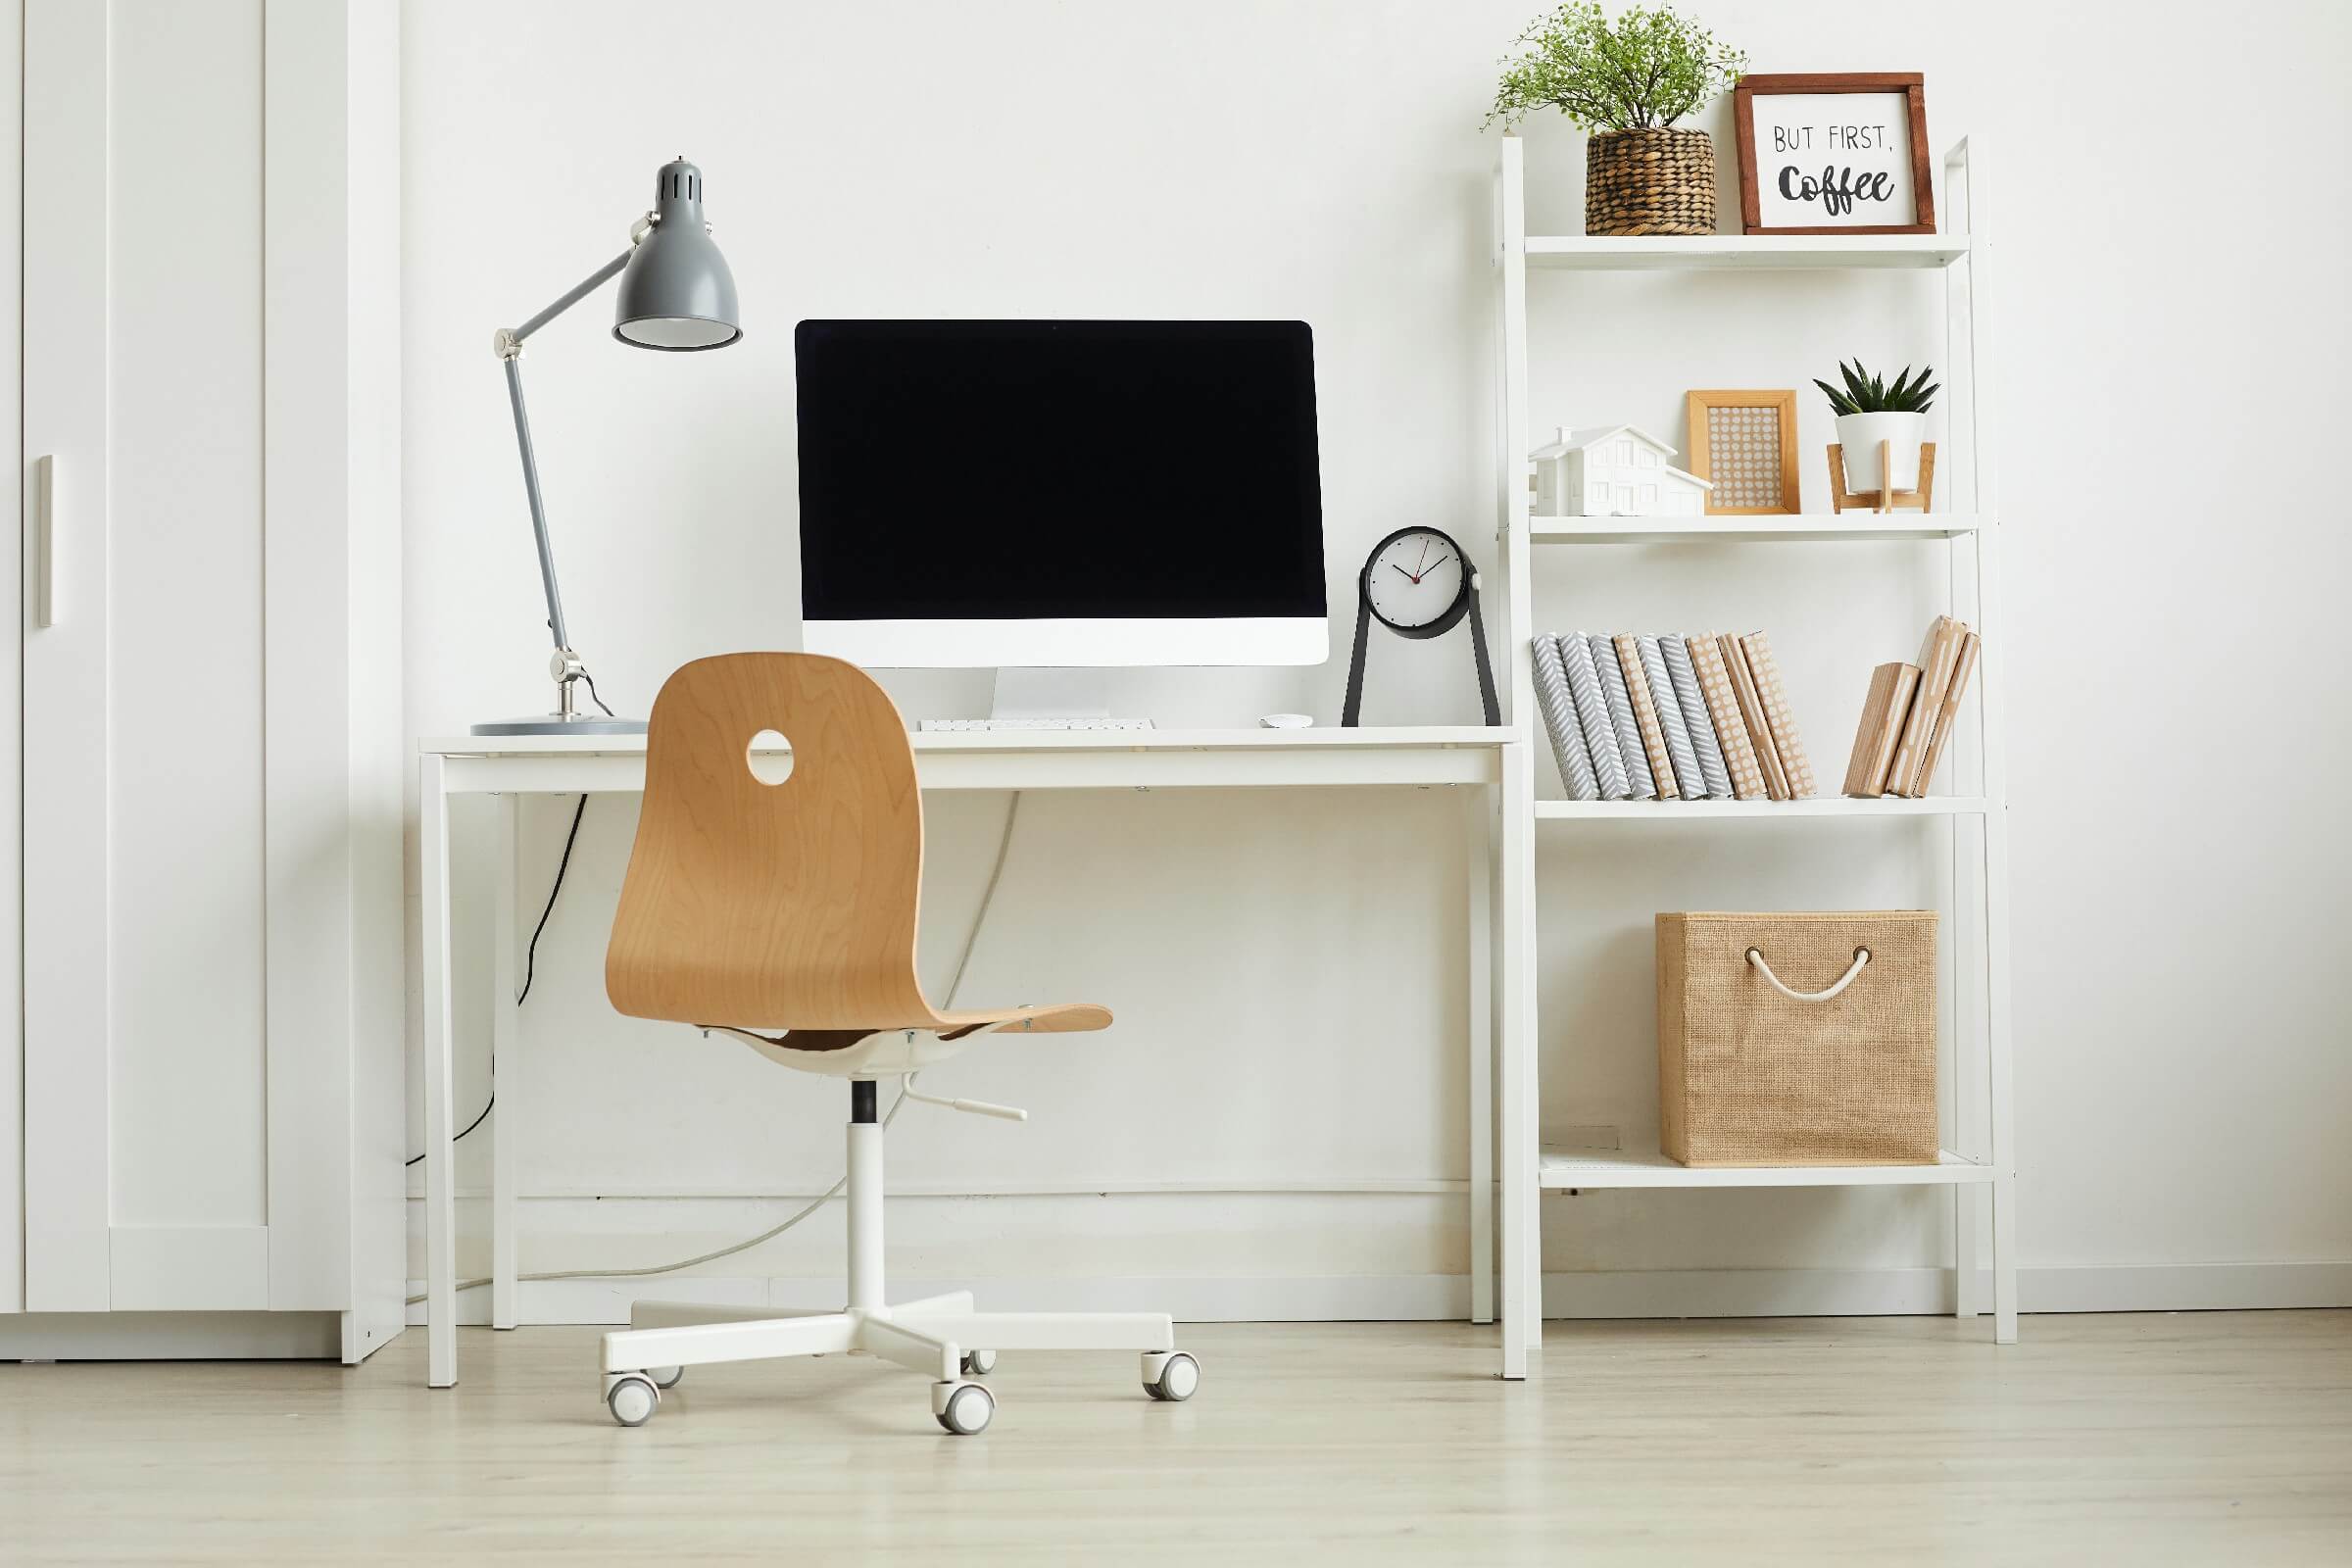 Enhance your office desk decor with shelves